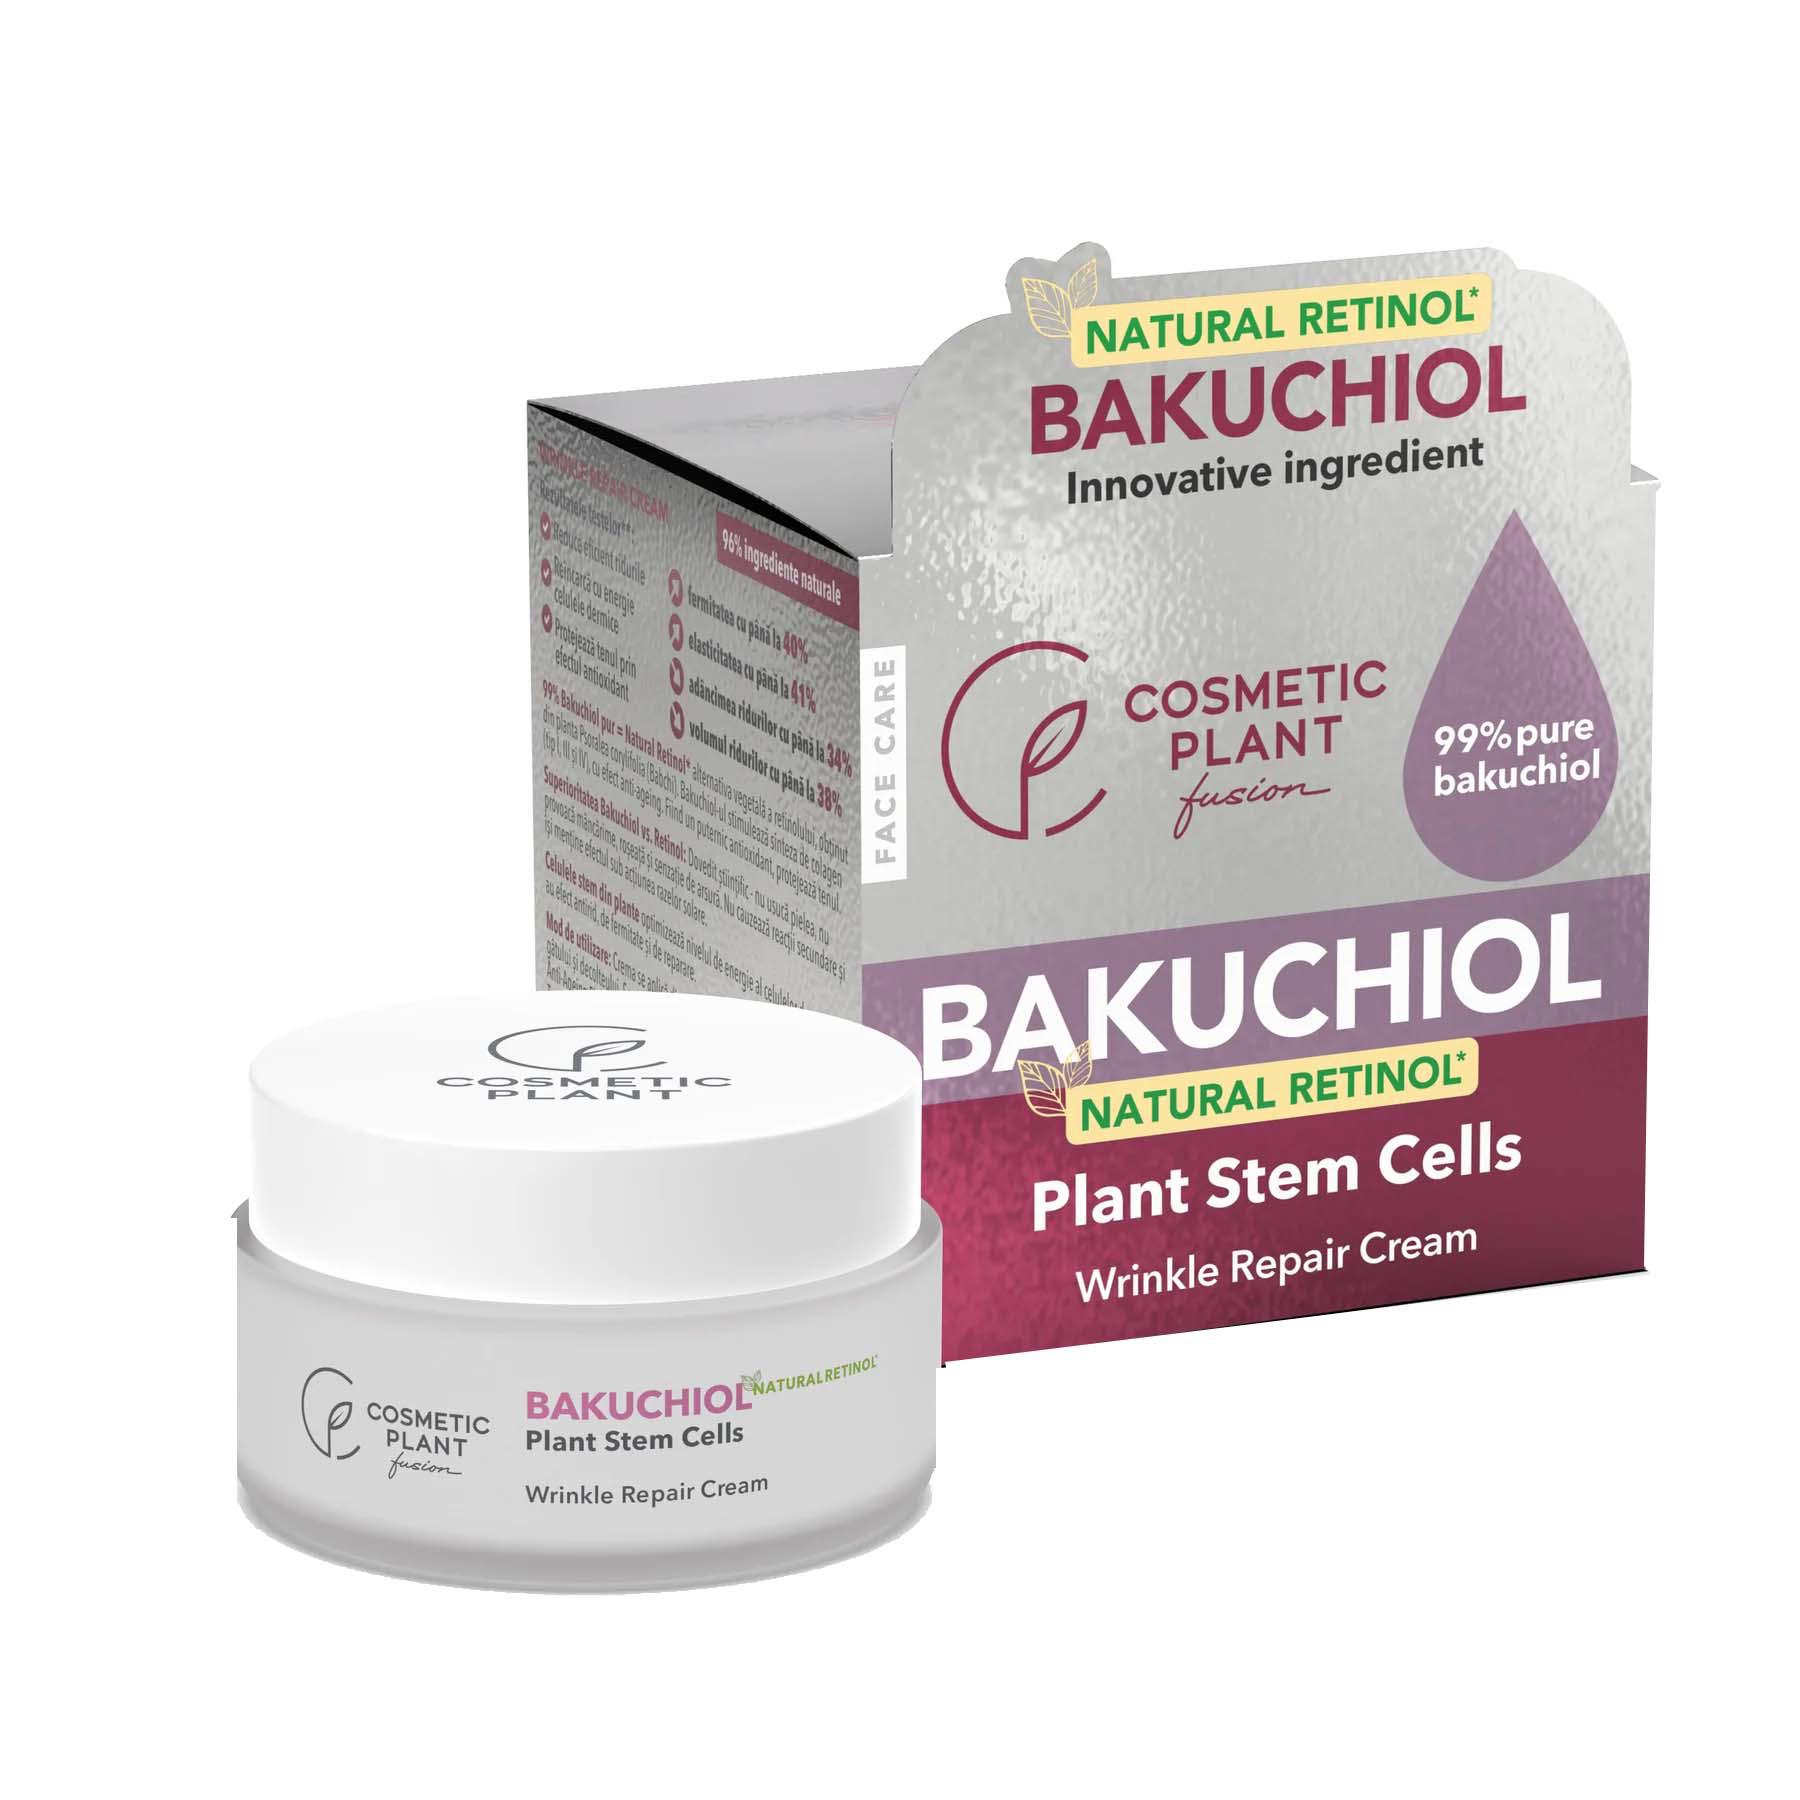 Wrinkle Repair Cream cu 99% Bakuchiol pur (Natural Retinol*) și Celule Stem din Plante 50 mililitri Cosmetic Plant